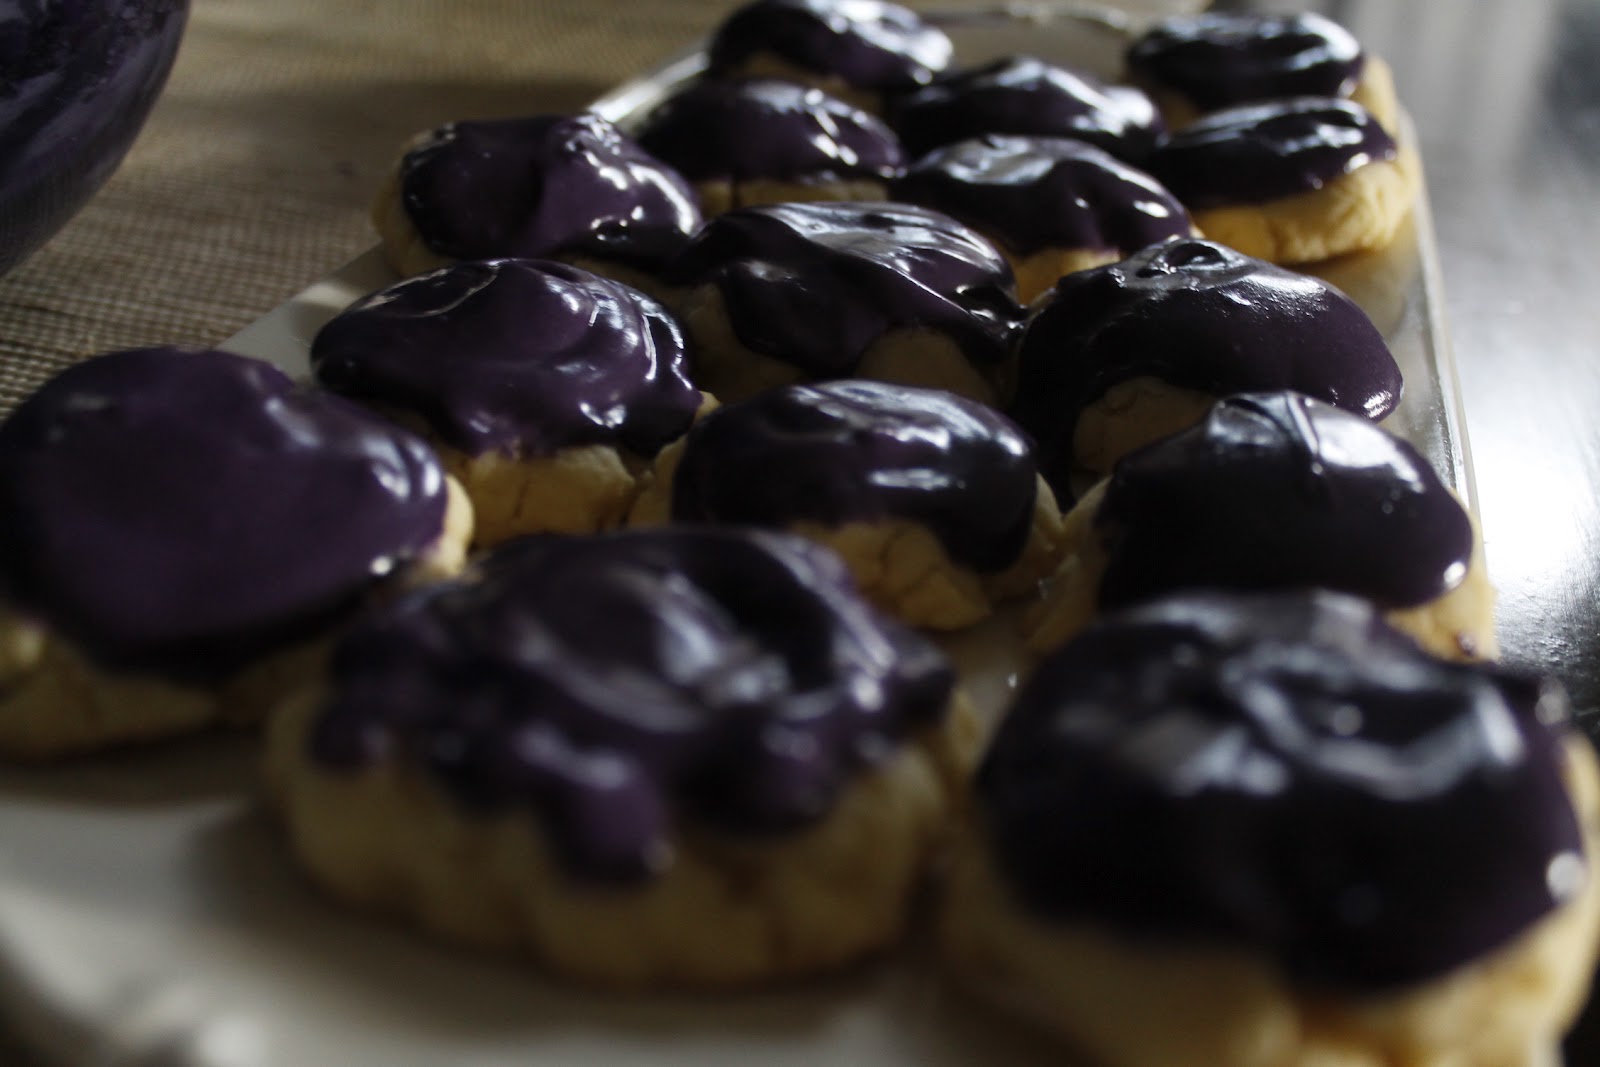 Gab Mesina: Grimace (Purple Guy From McDonald's) Cookie Recipe